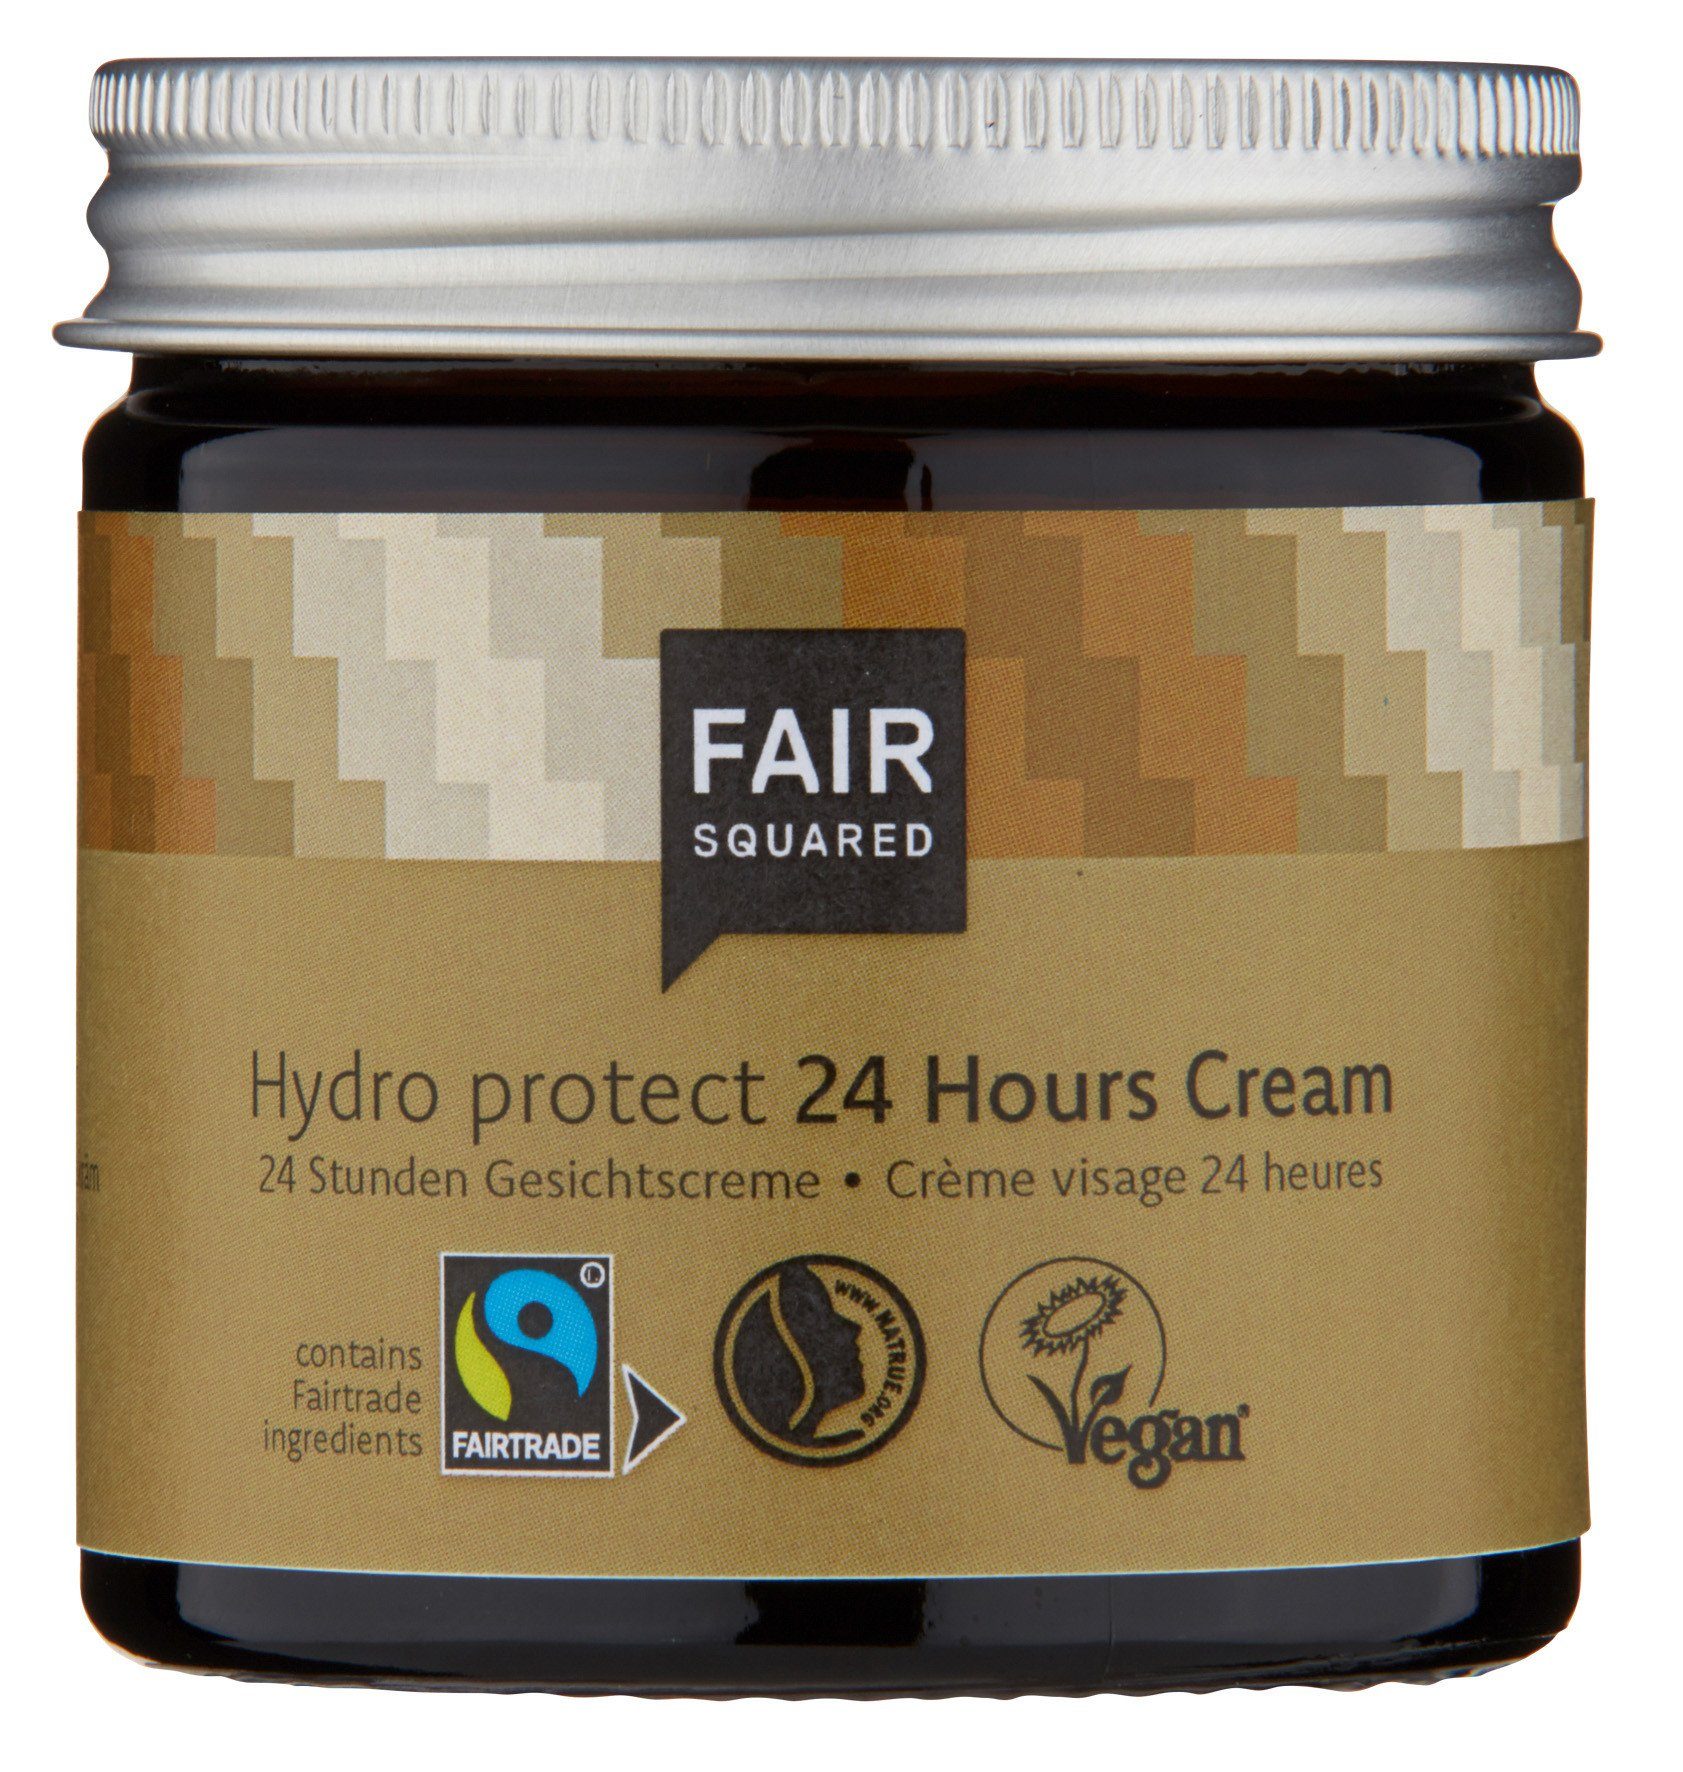 Haut Fair 1-tlg., 50 ml trockene Tiegel, Intensivpflege SQUARED Hautcreme Squared FAIR für 24-Stunden-Creme